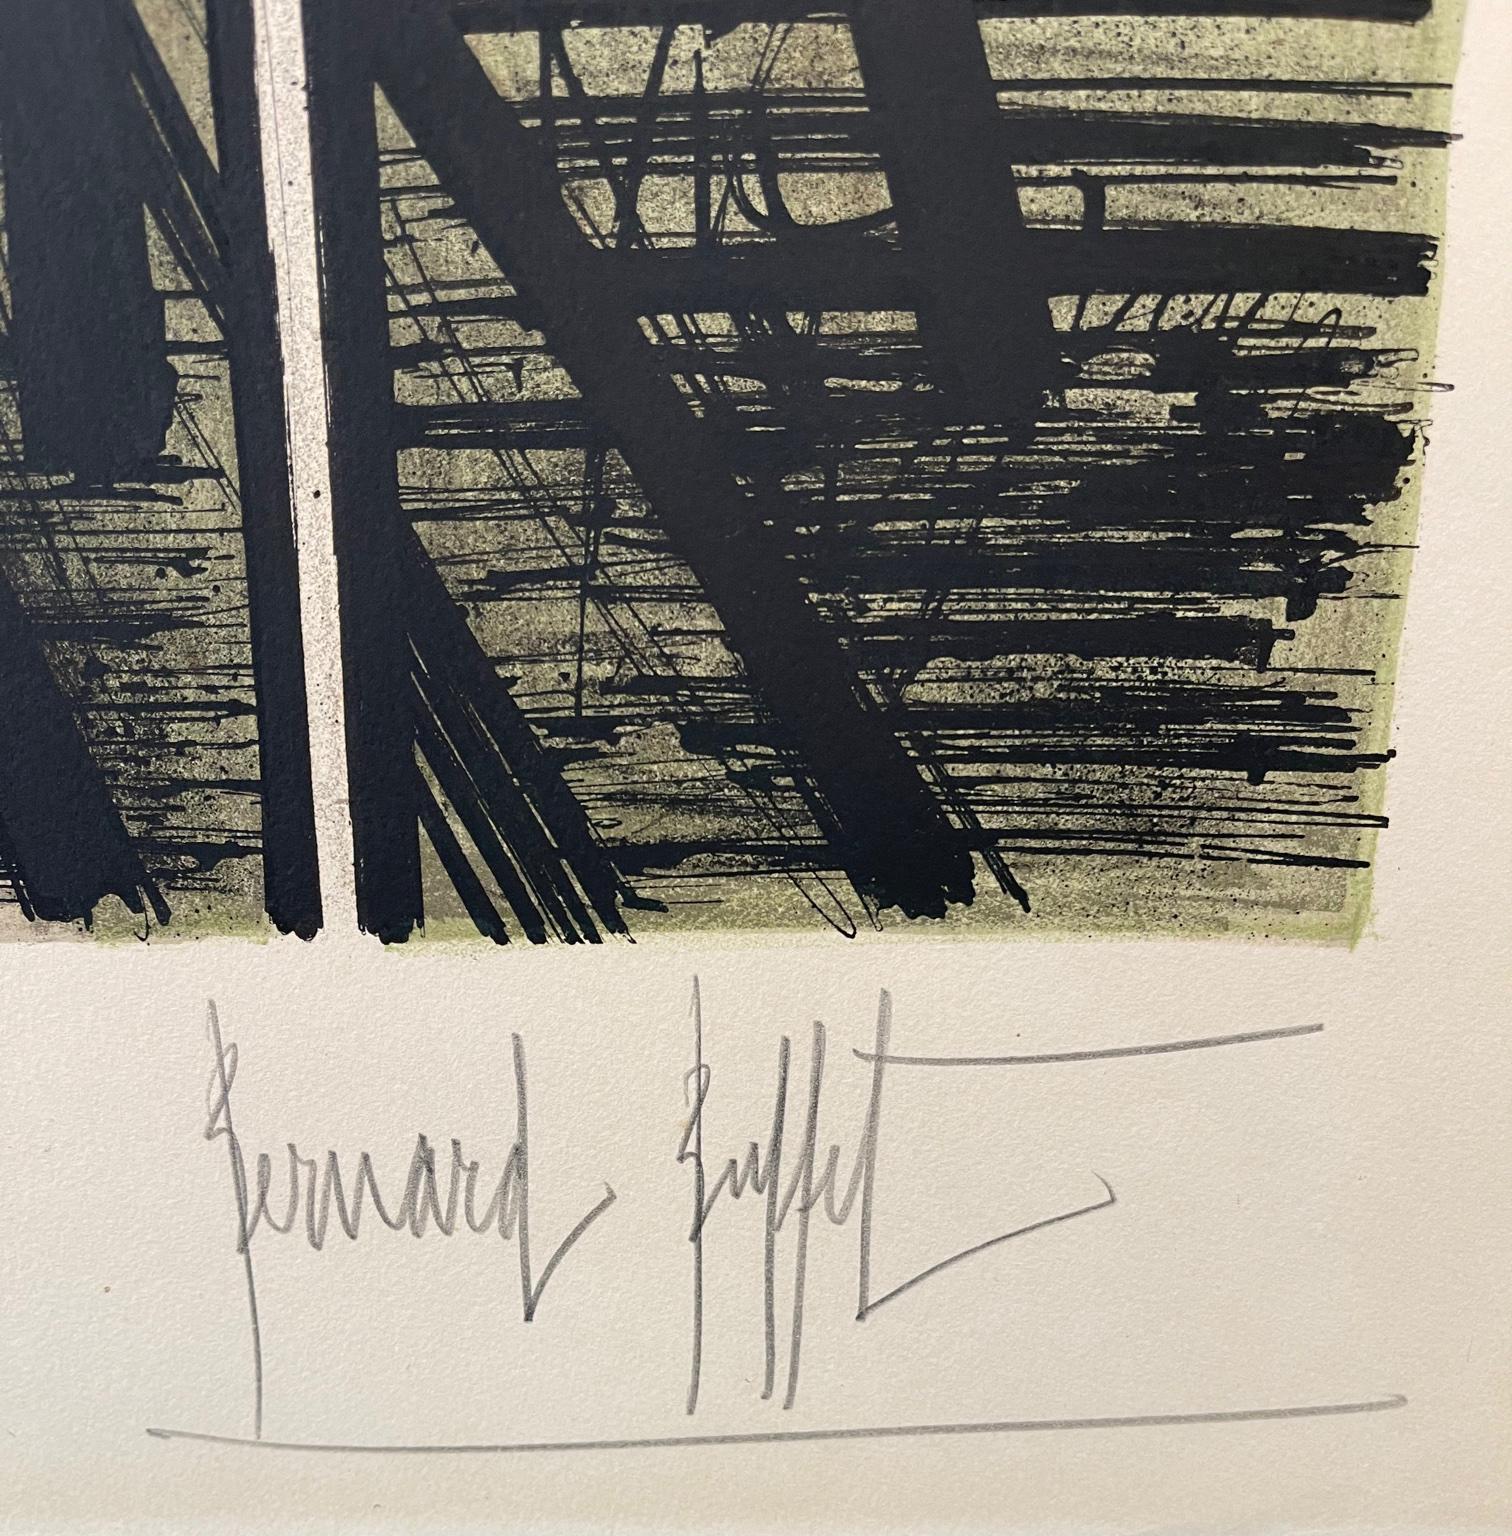 The road - Abstract Print by Bernard Buffet